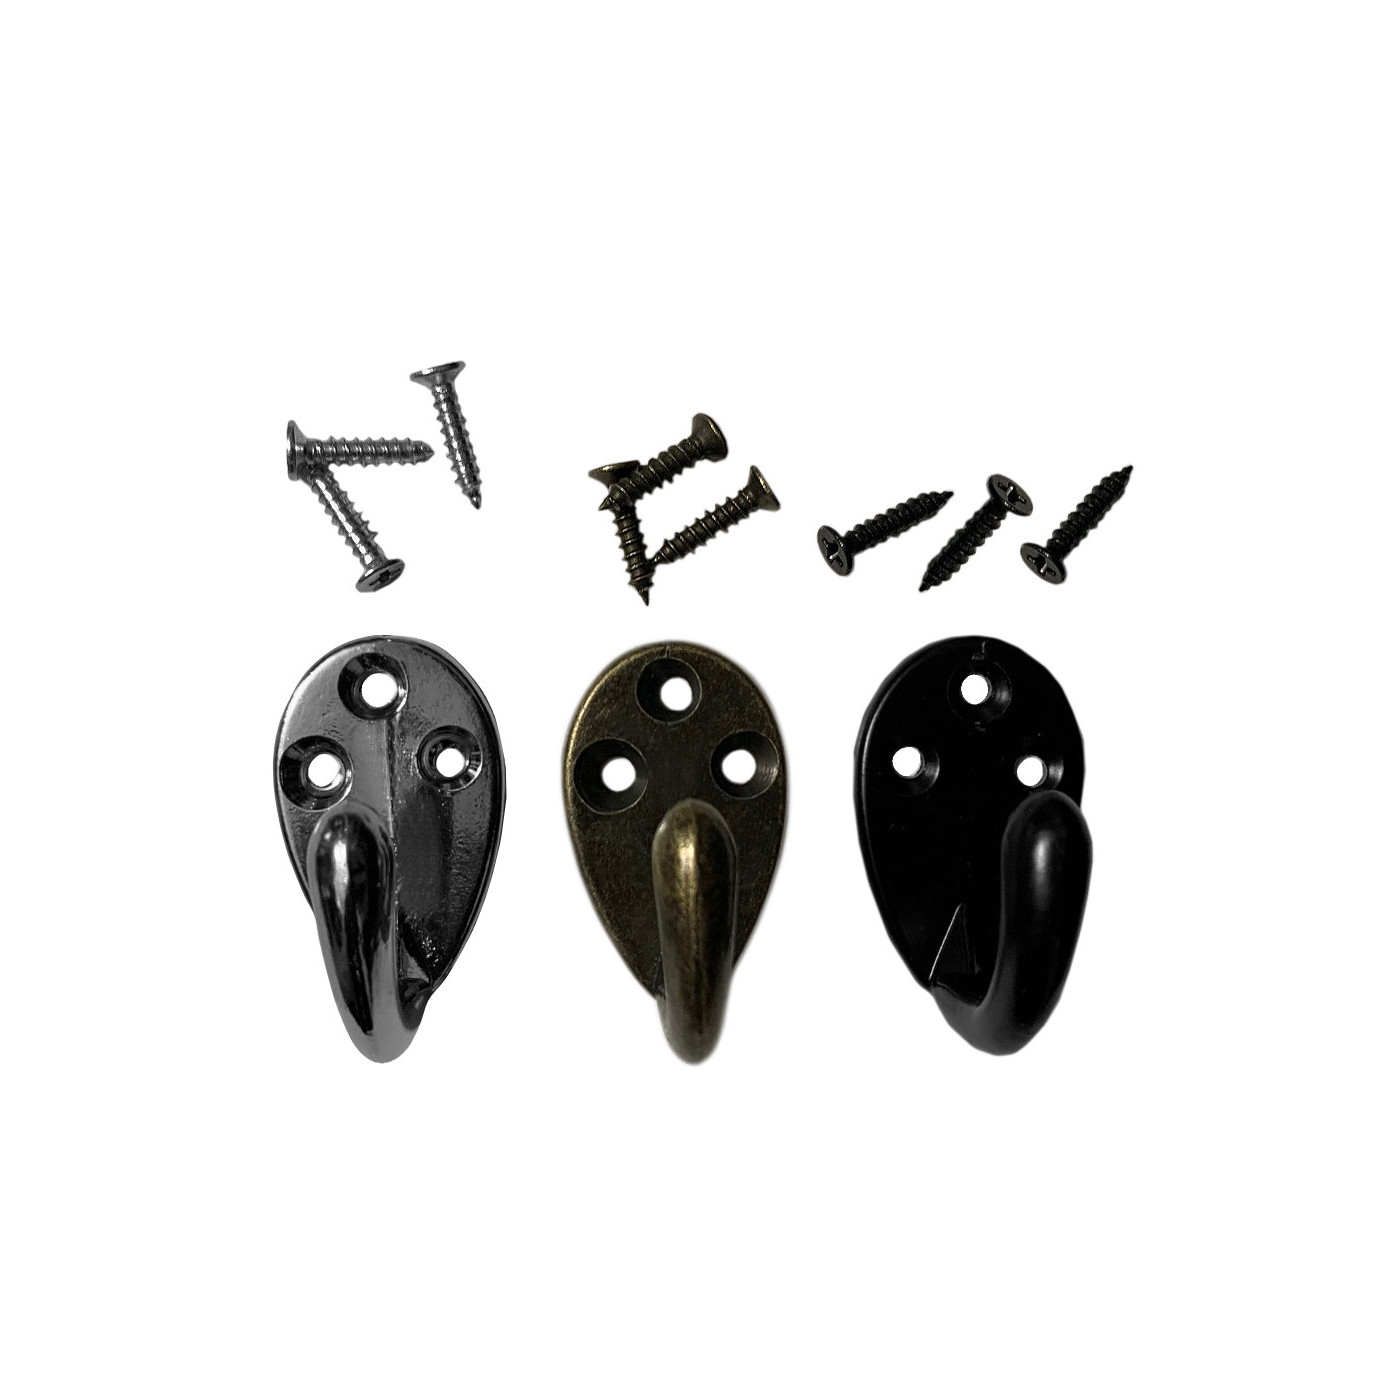 https://www.woodtoolsanddeco.com/6850-large_default/set-of-6-small-metal-clothes-hooks-coat-hangers-color-bronze.jpg